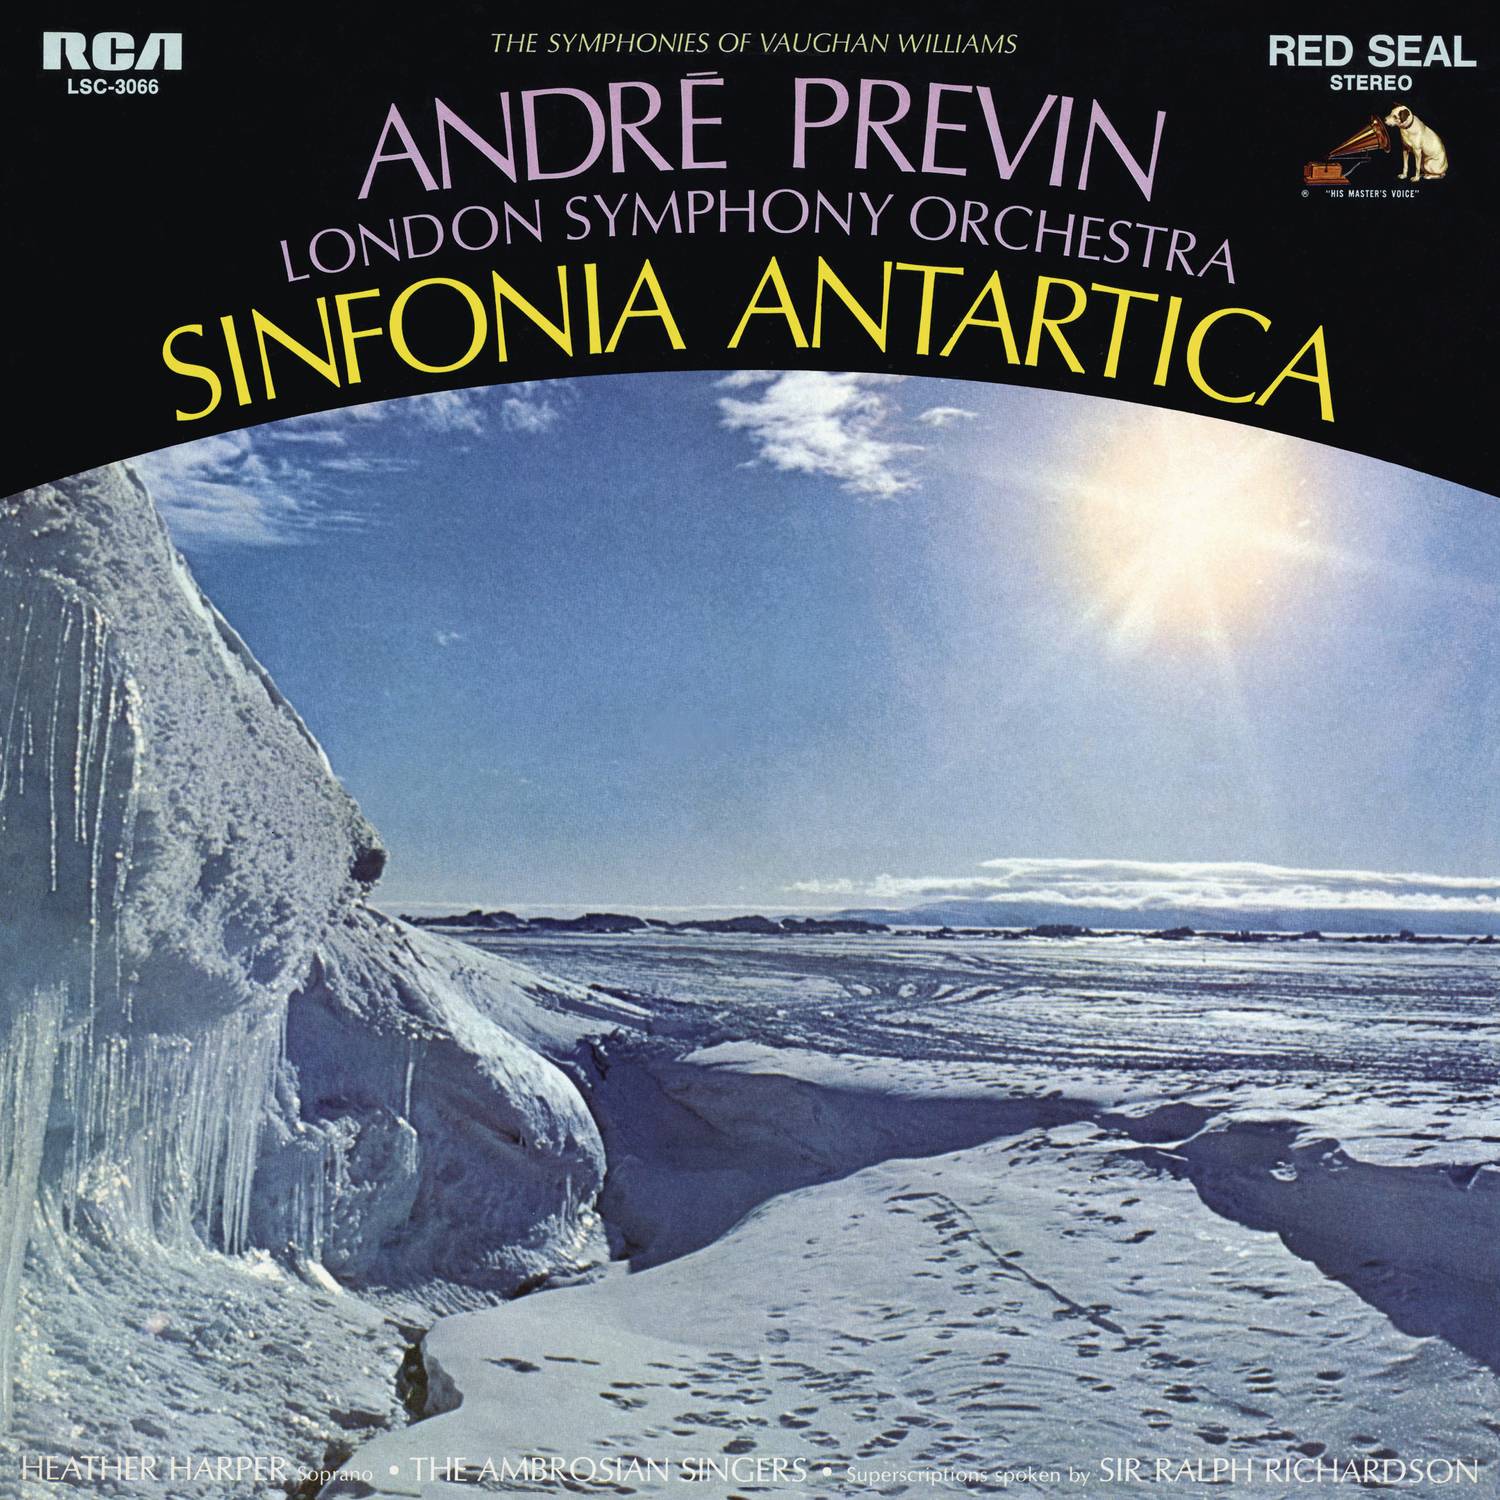 Sinfonia Antartica (Symphony No. 7):III. Landscape - Lento